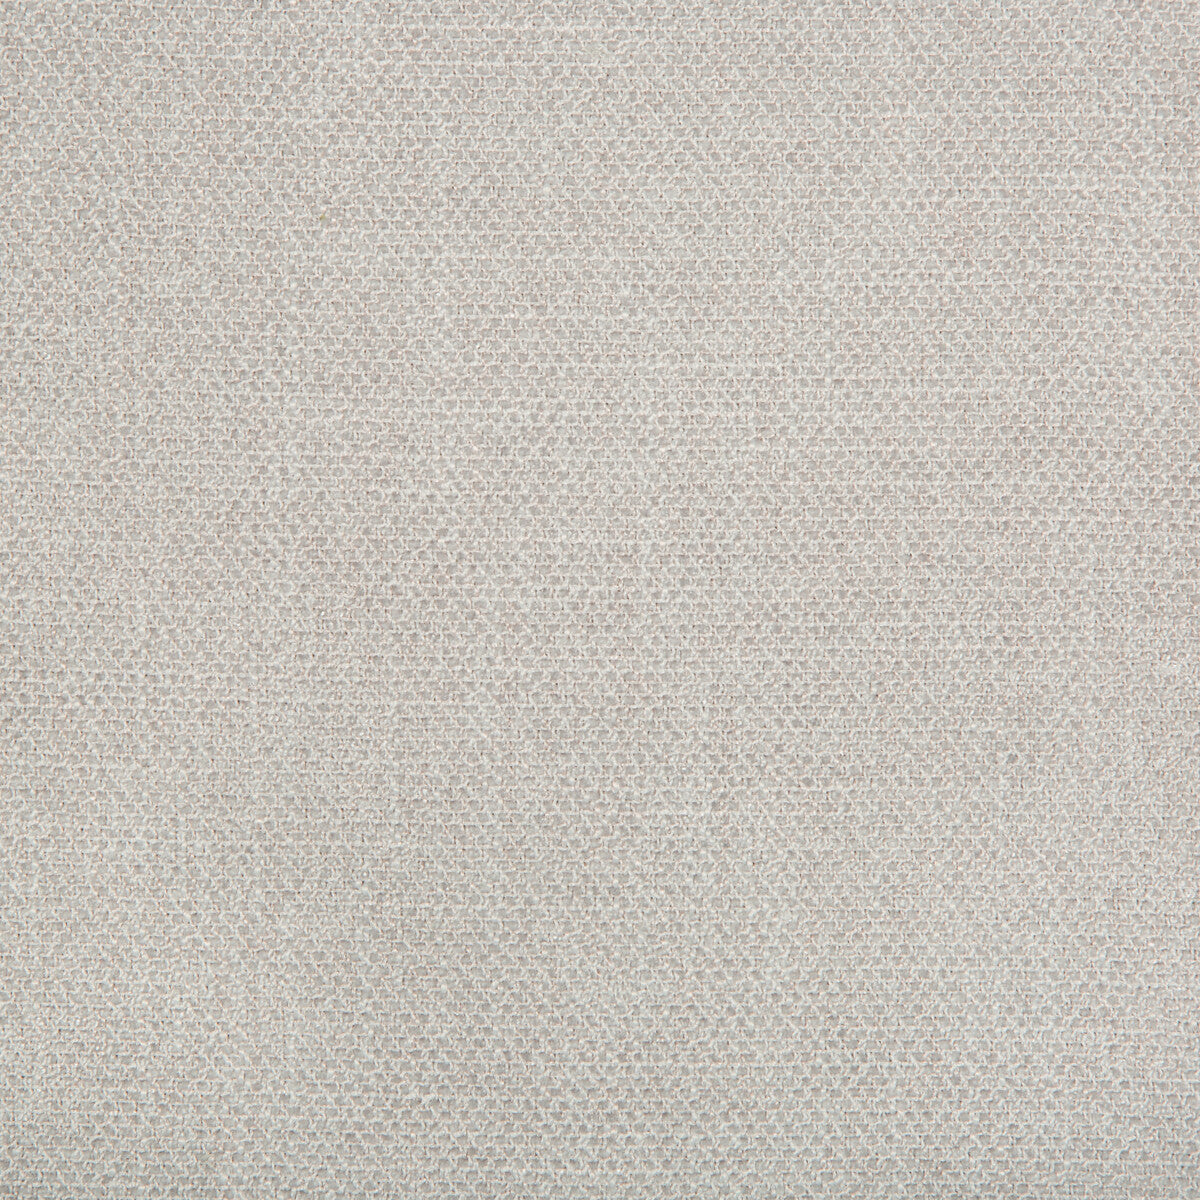 Kf Smt fabric - pattern 35060.110.0 - by Kravet Smart in the Performance Kravetarmor collection